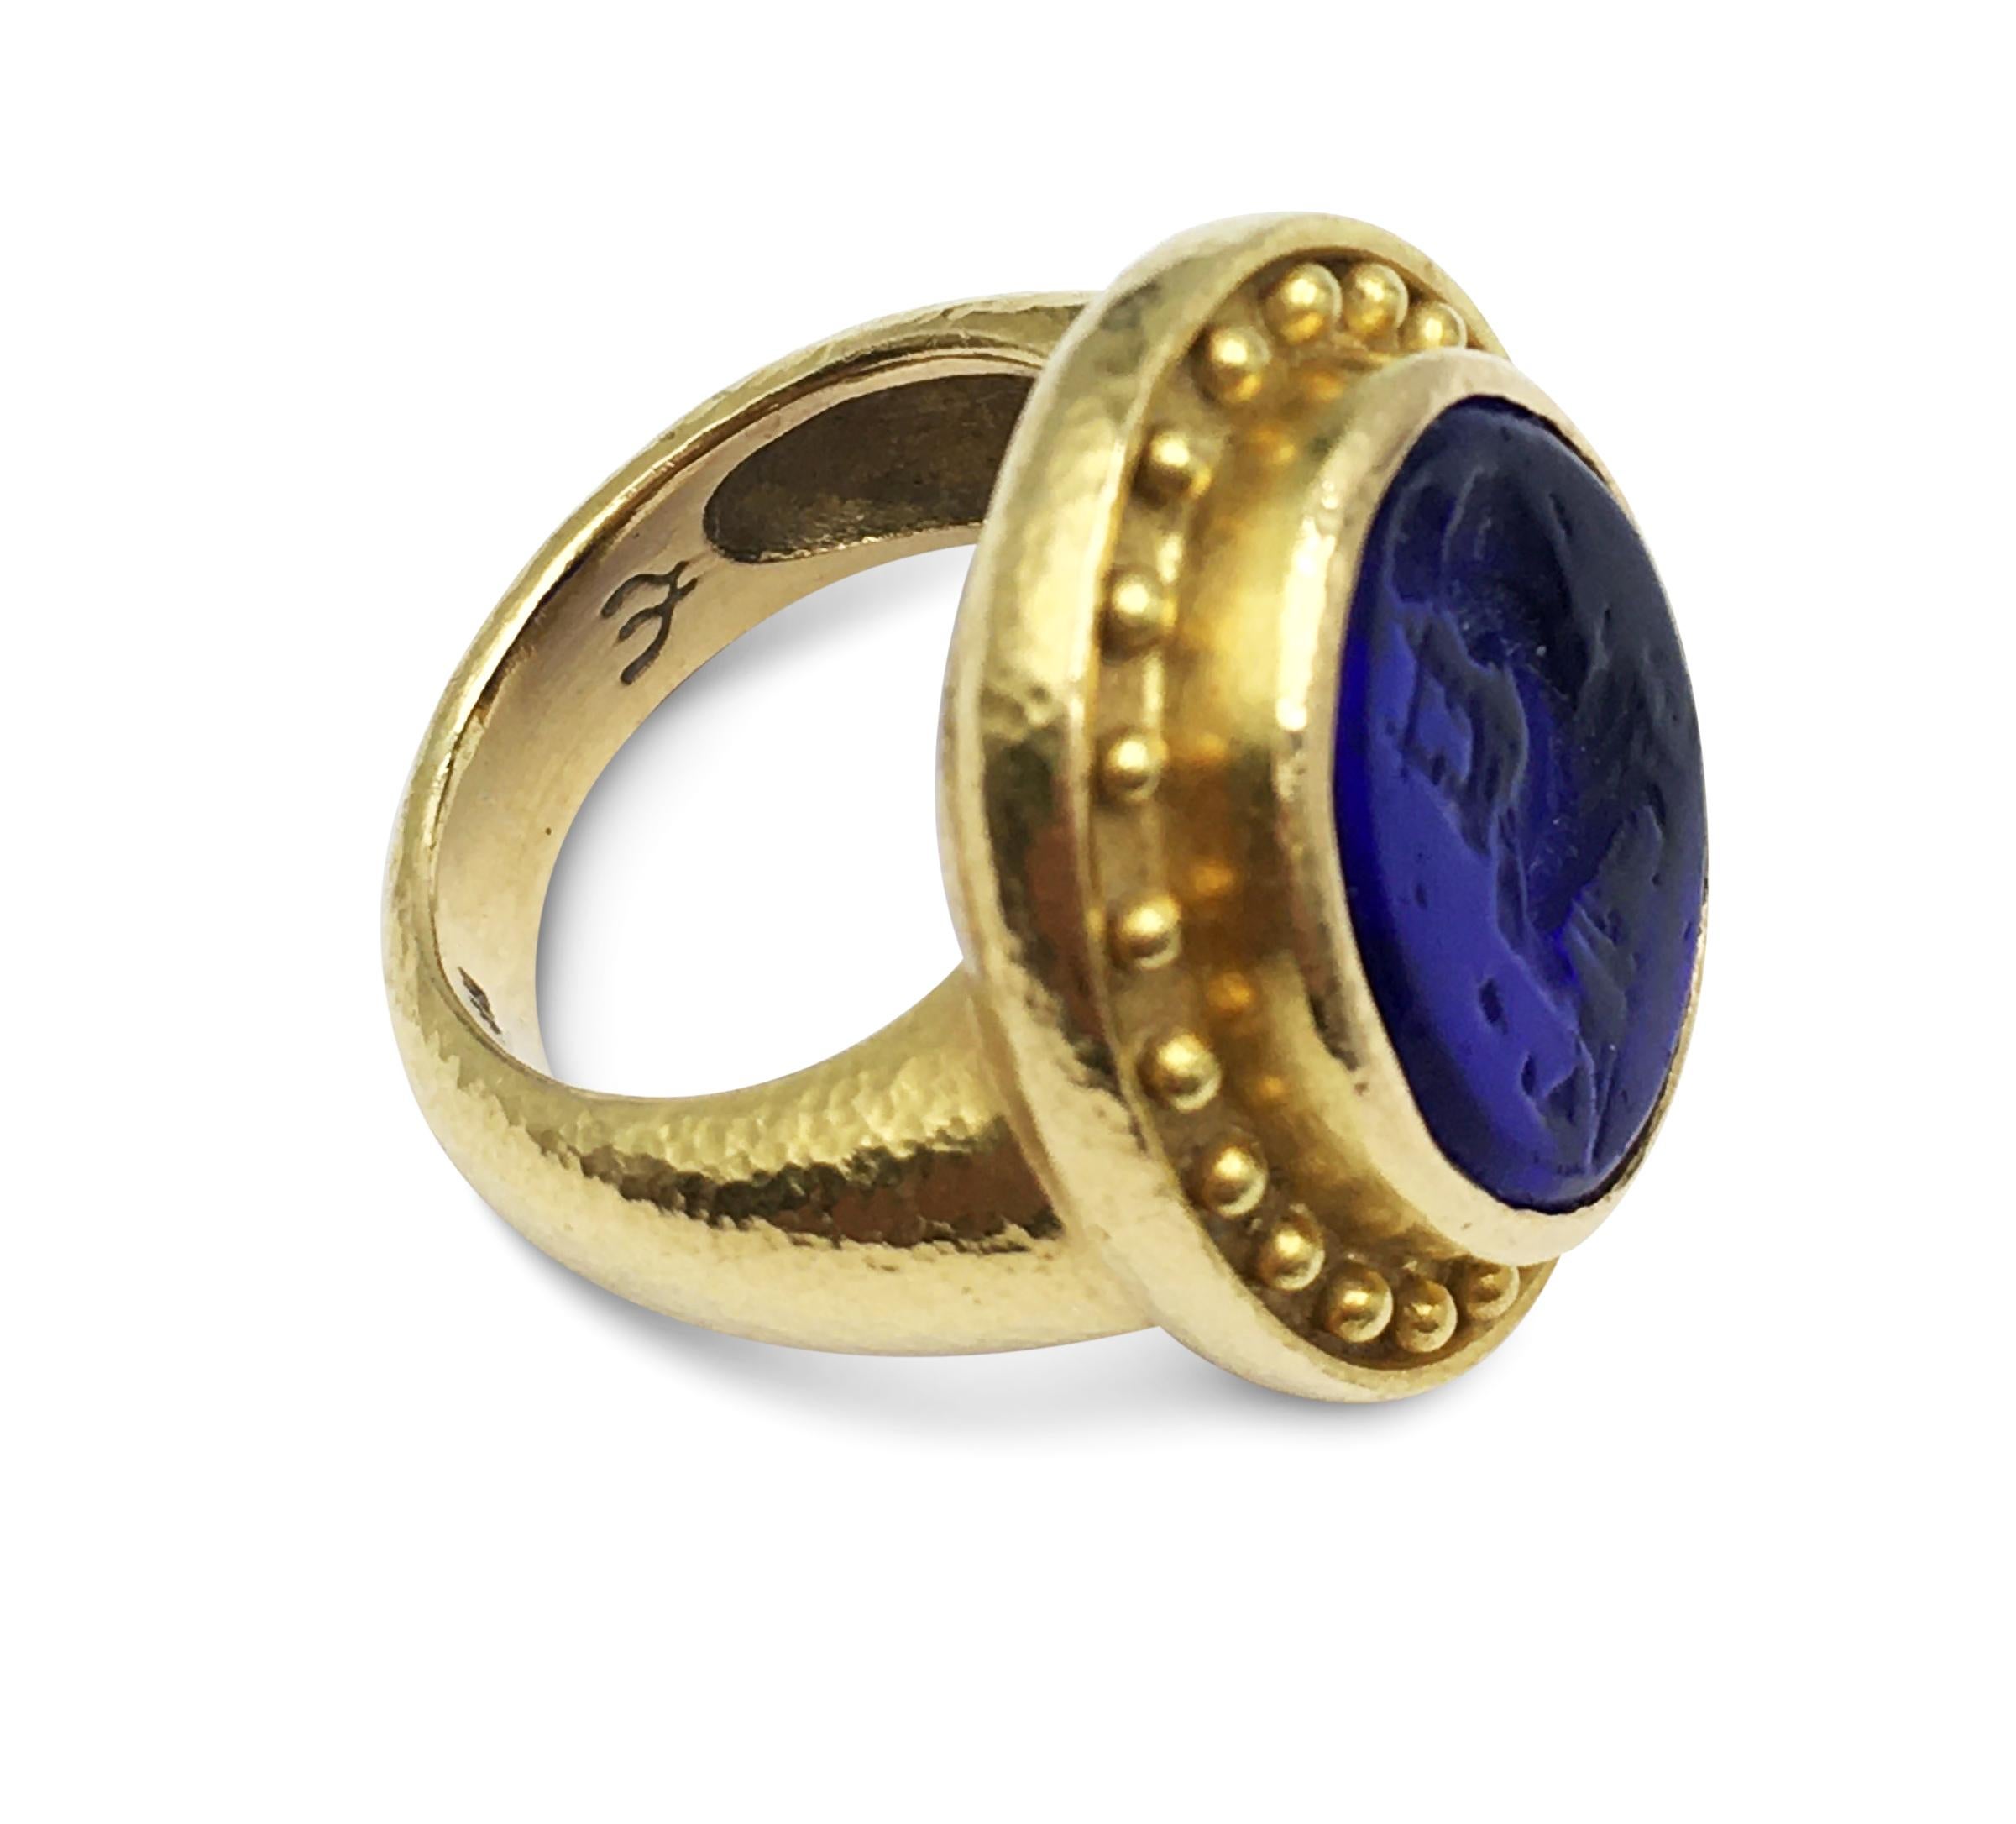 Elizabeth Locke Gold and Carved Venetian Glass Intaglio Ring 2